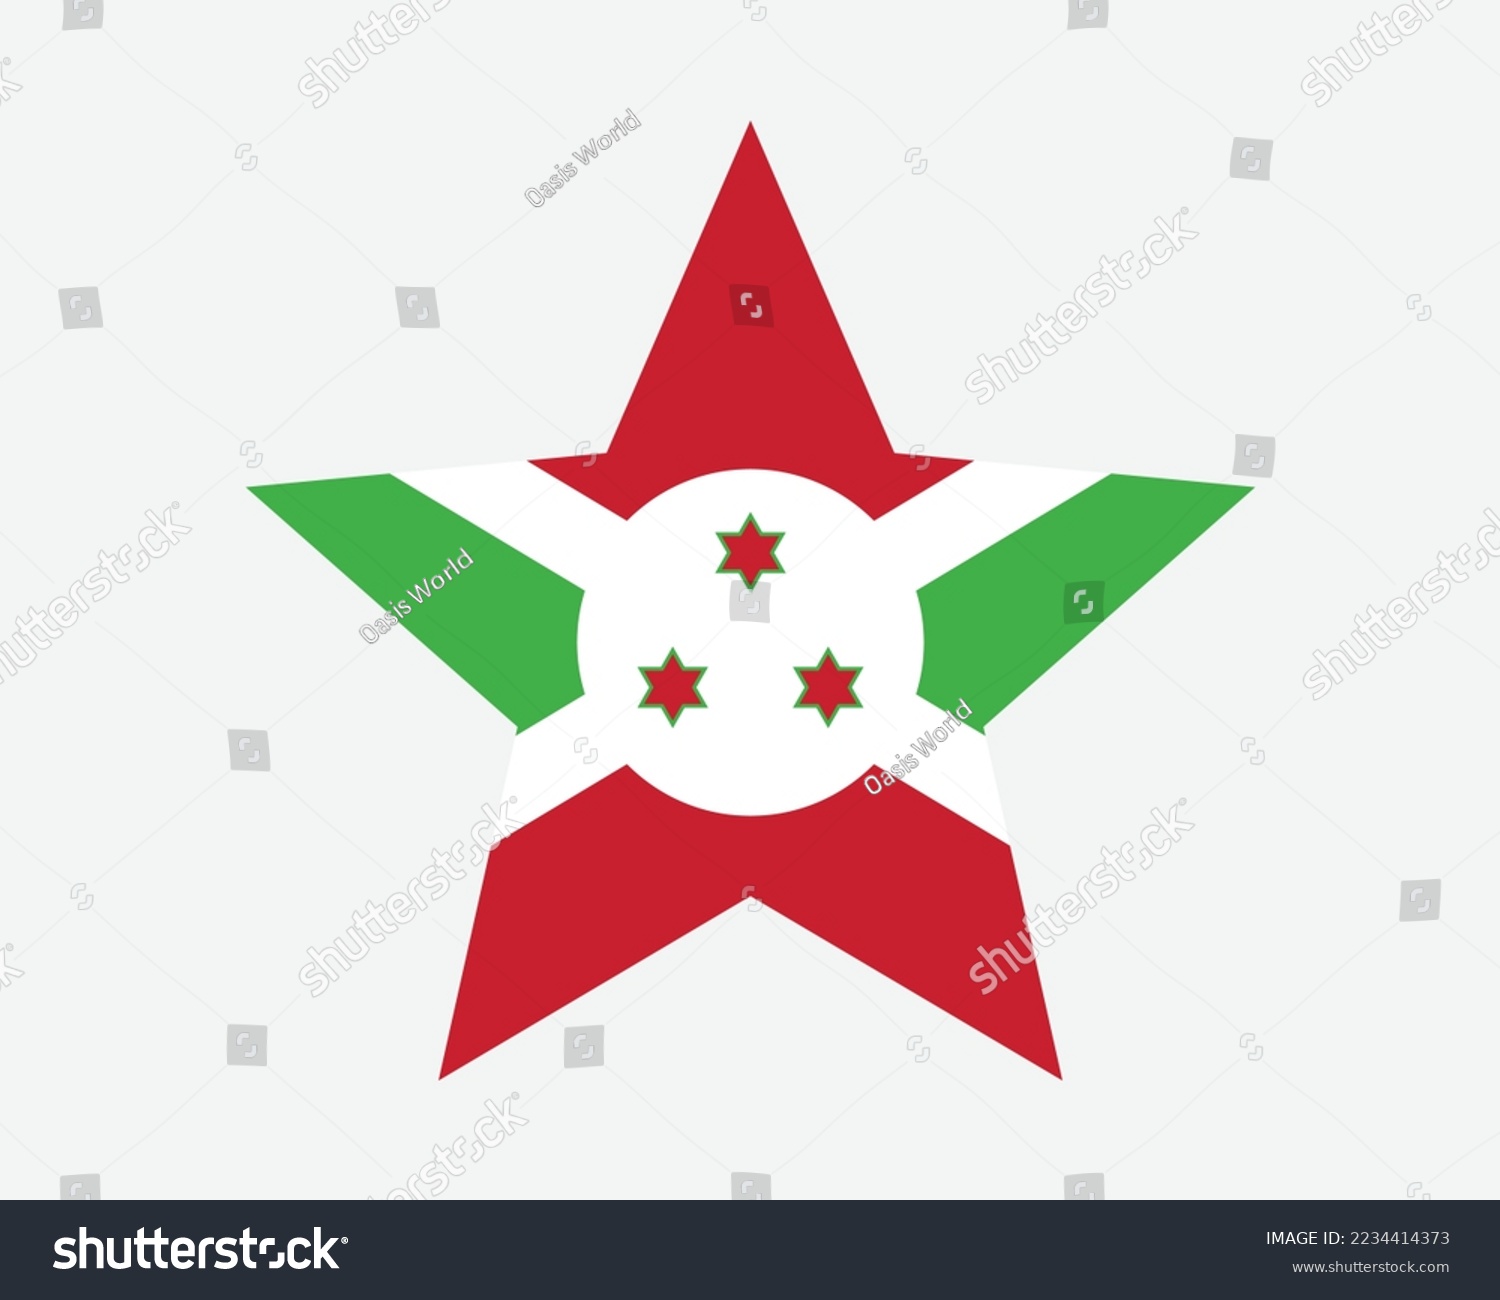 SVG of Burundi Star Flag. Umurundi Abarundi Star Shape Flag. Country National Banner Icon Symbol Vector 2D Flat Artwork Graphic Illustration svg